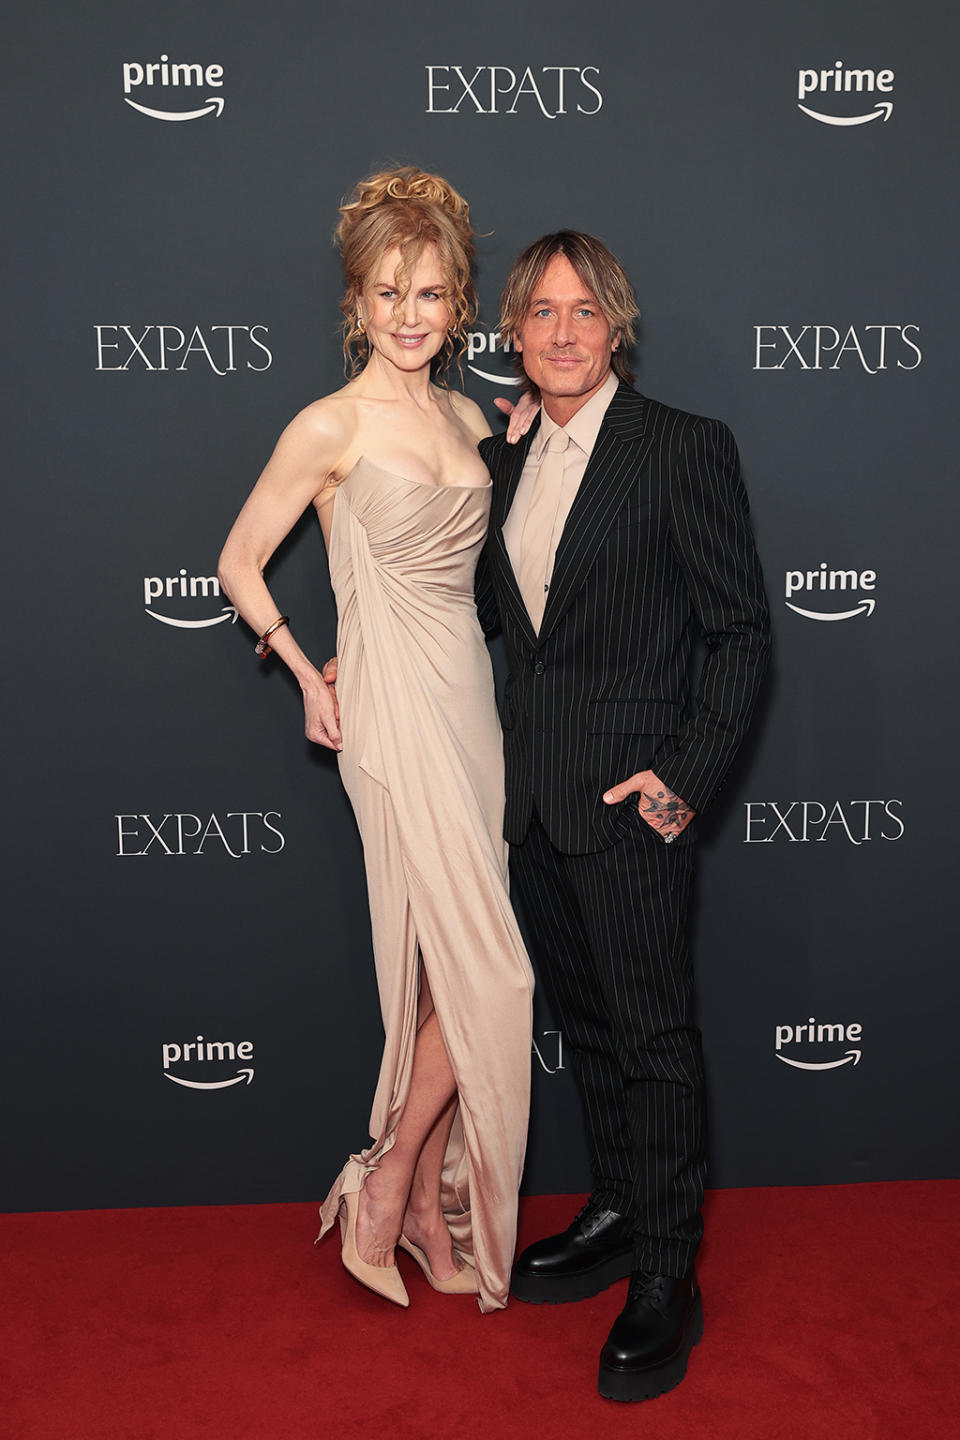 Nicole Kidman, "Expats," Keith Urban, Fendi, couture, pumps, suede, corset, red carpet, screening.